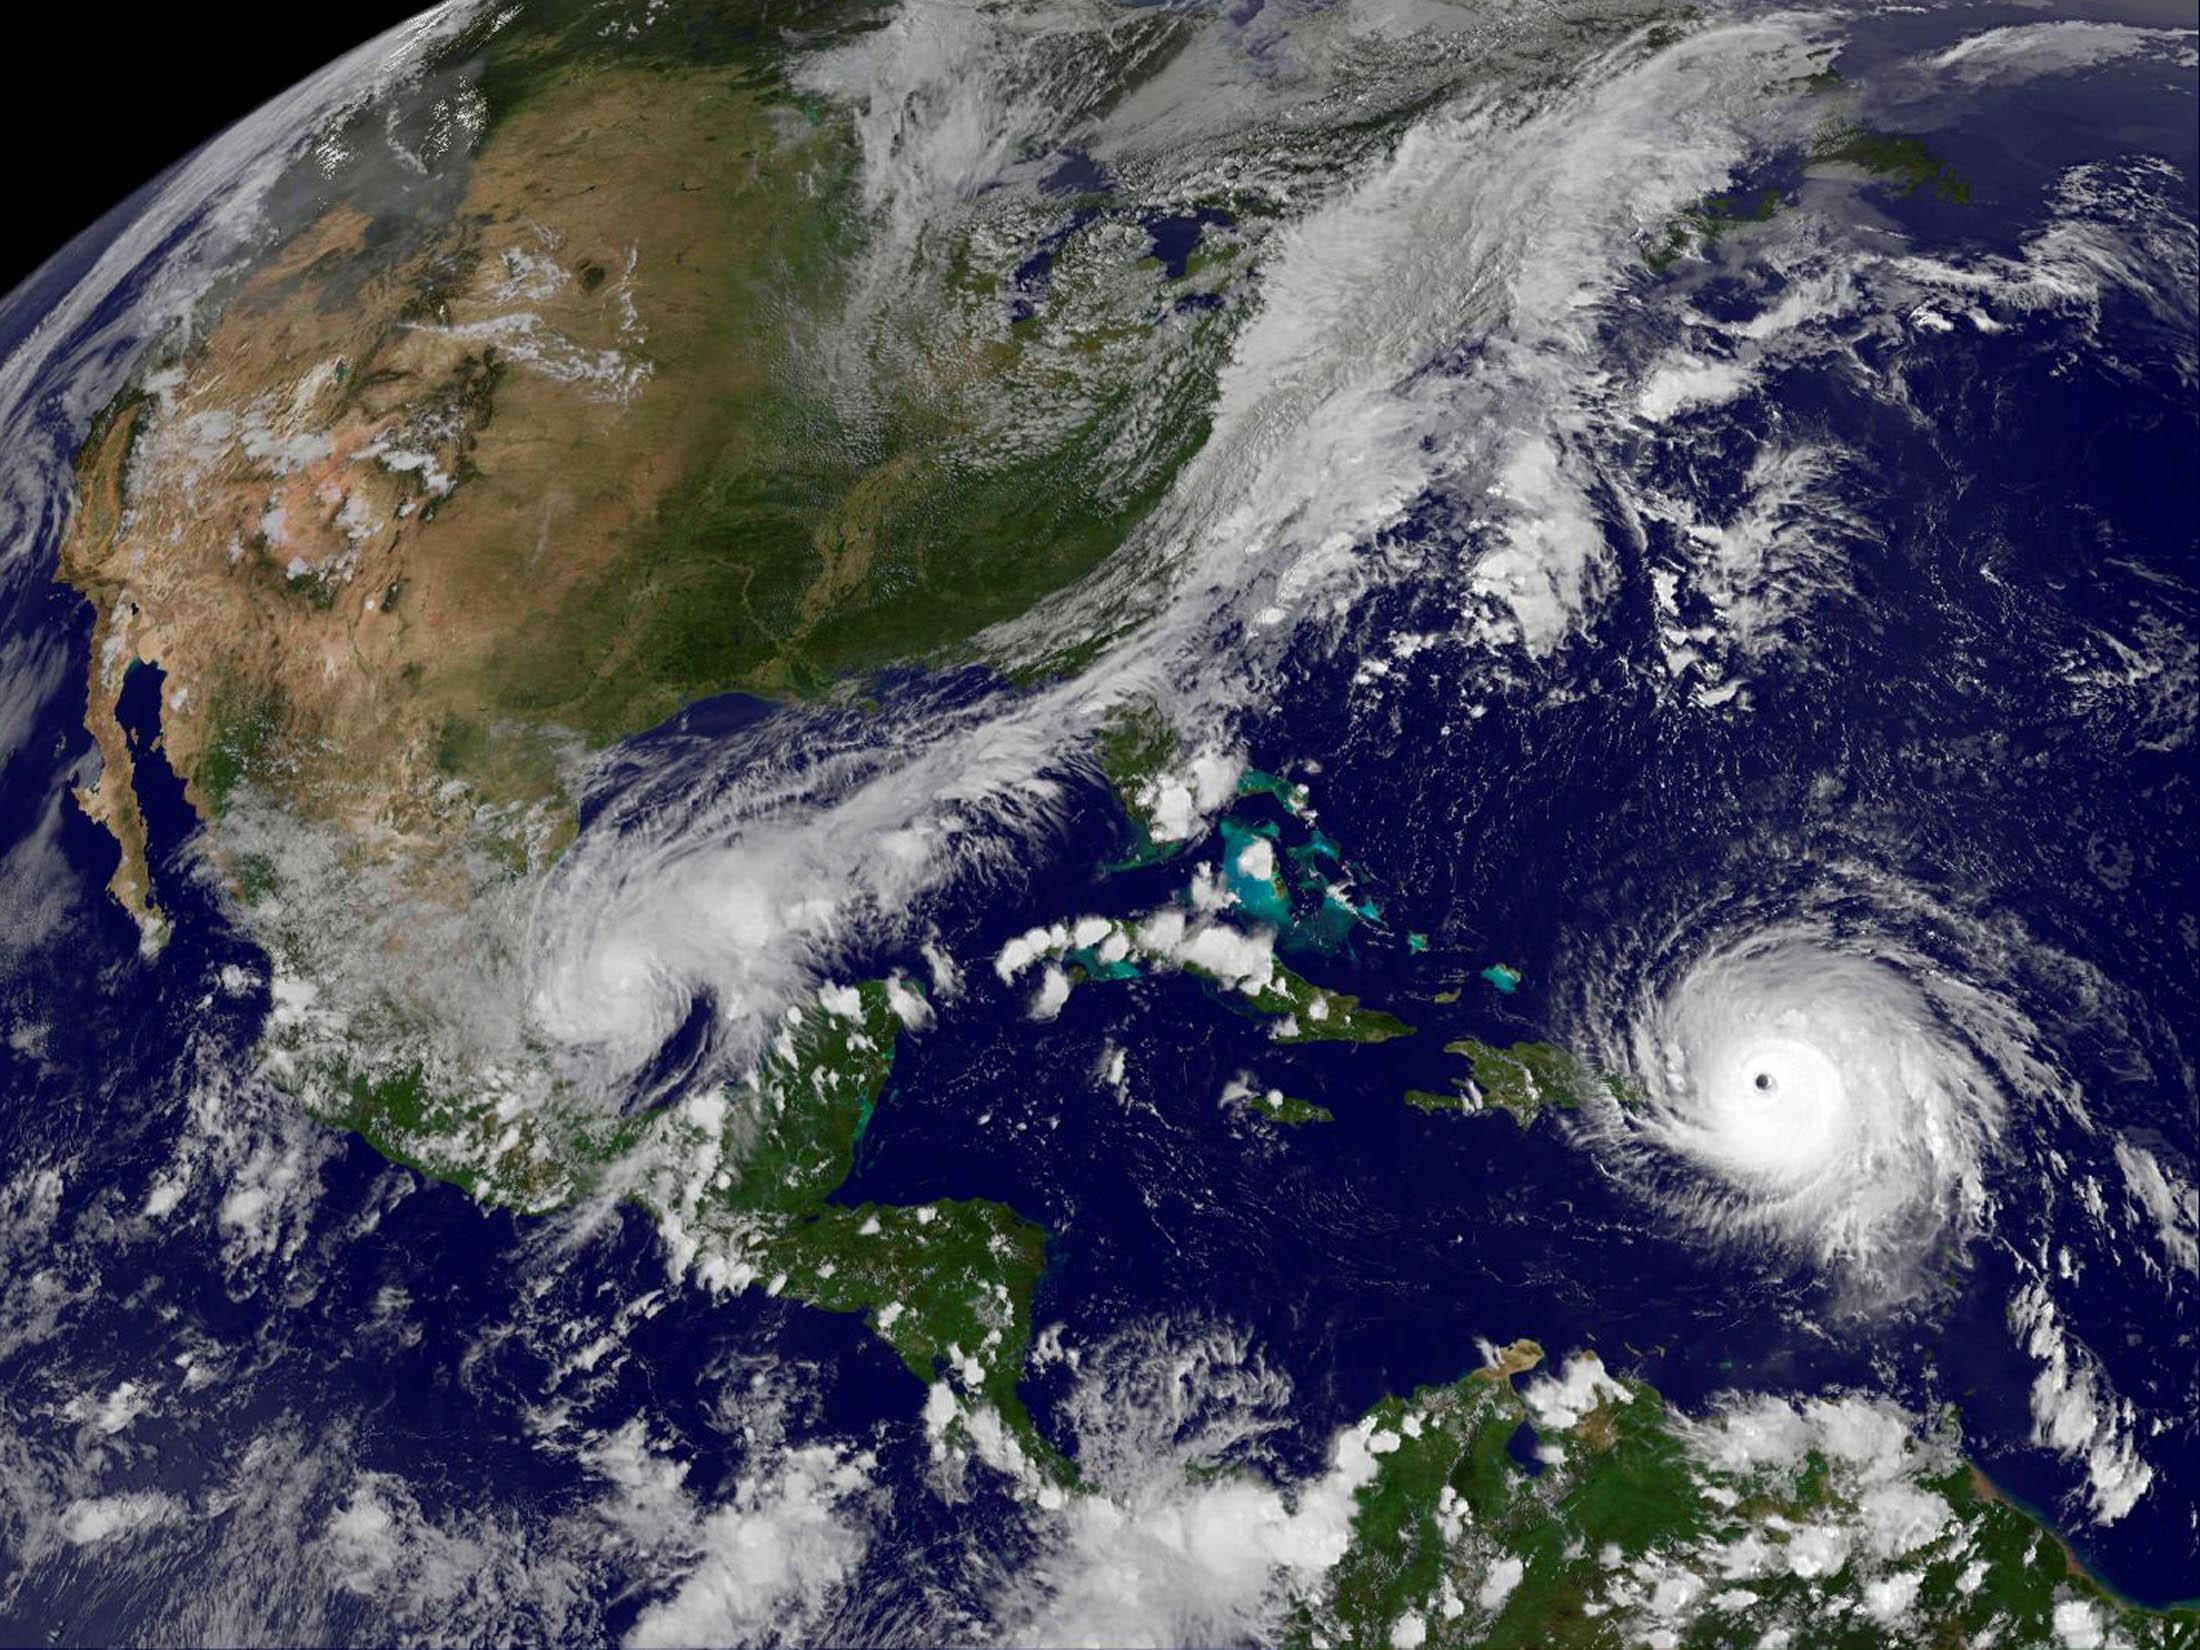 Hurricane Irma churns across the Atlantic Ocean past Puerto Rico over Dominican Republic in this Nasa satellite image